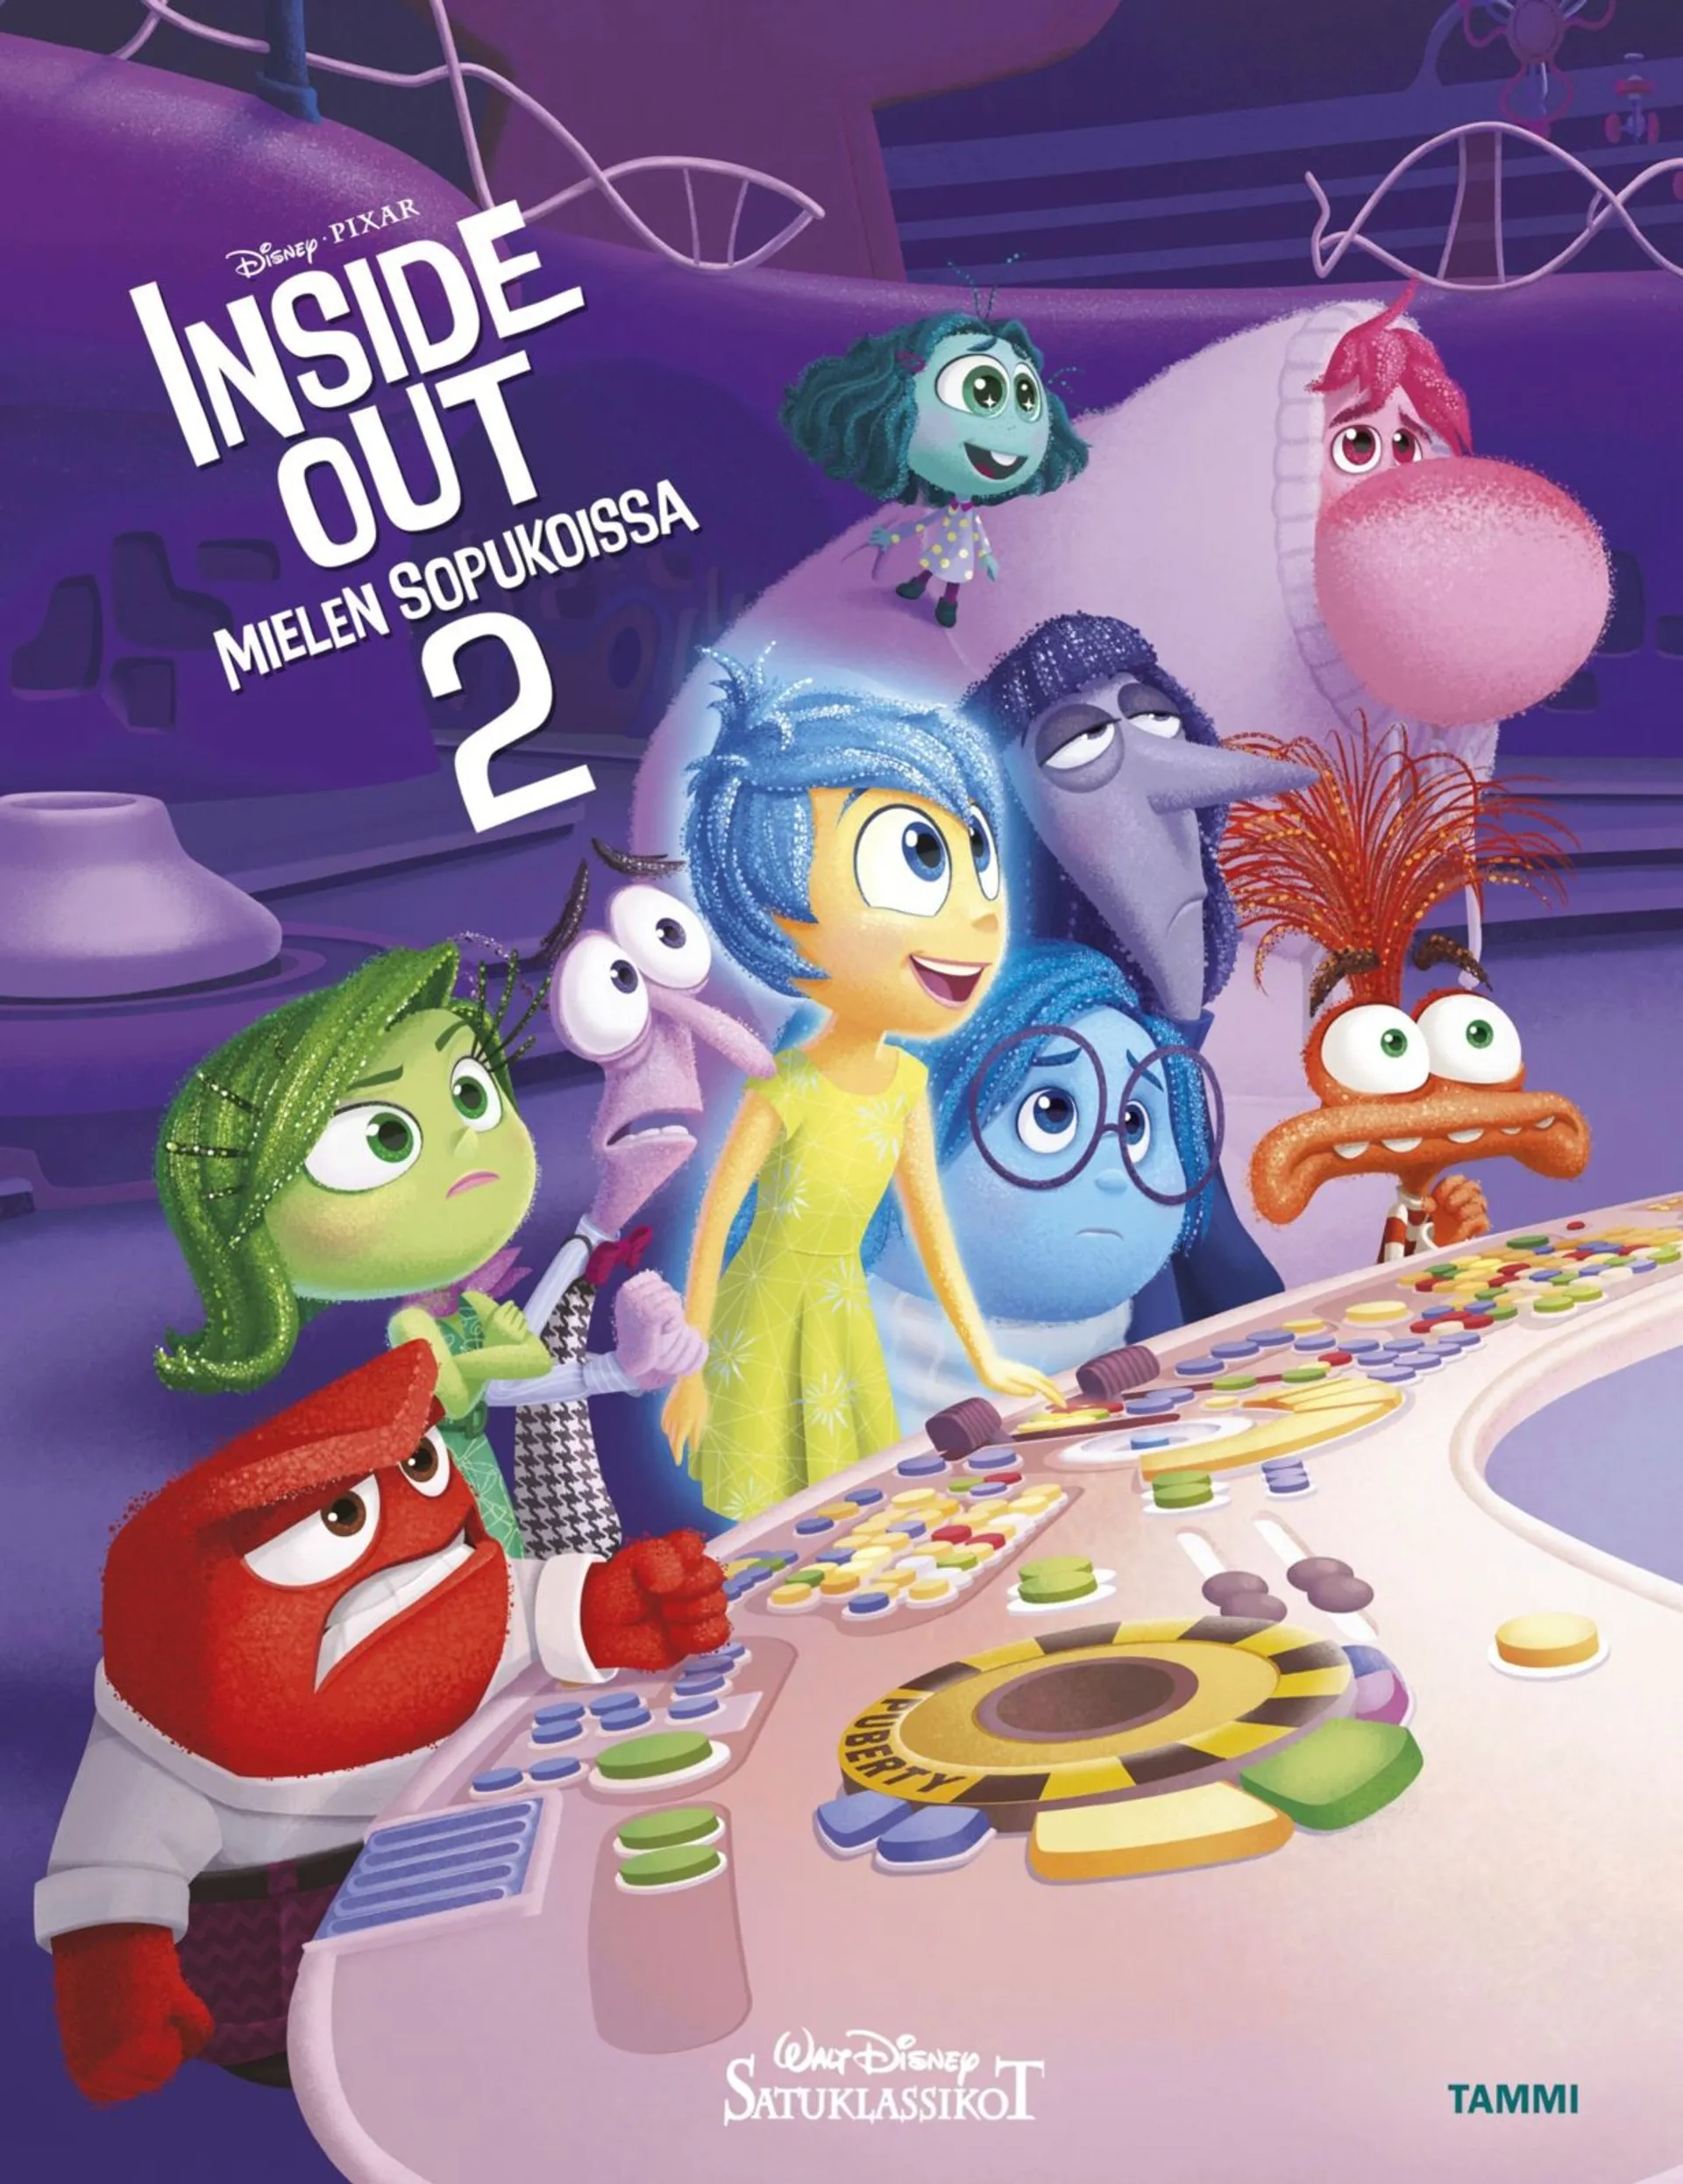 Disney Pixar. Inside Out 2. Satuklassikot - Mielen sopukoissa